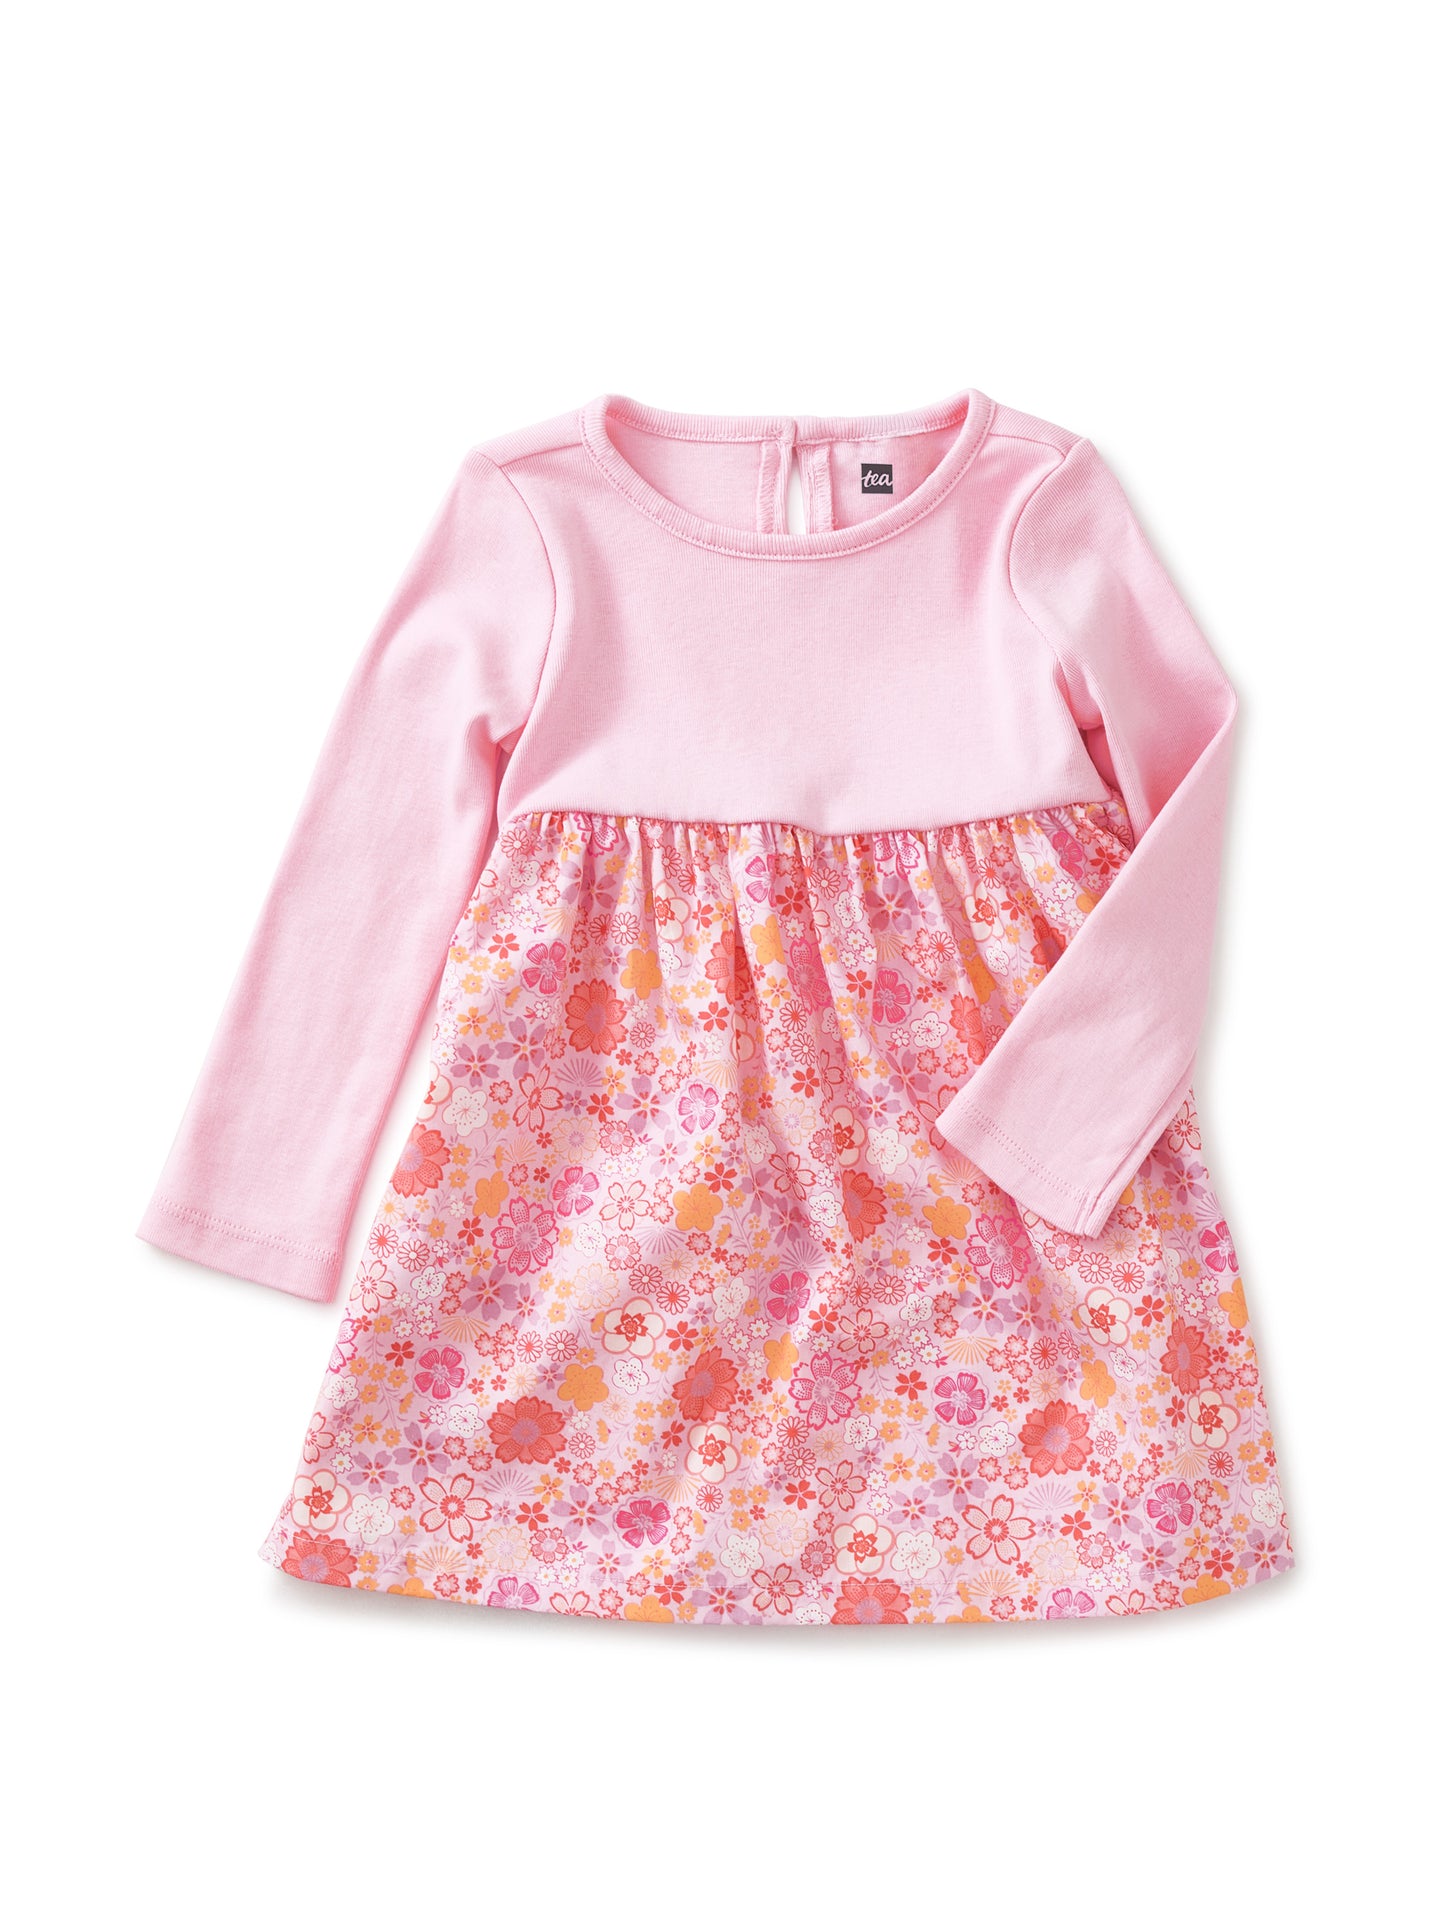 Print Mix Skirted Baby Dress - Ditsy Sakura Floral